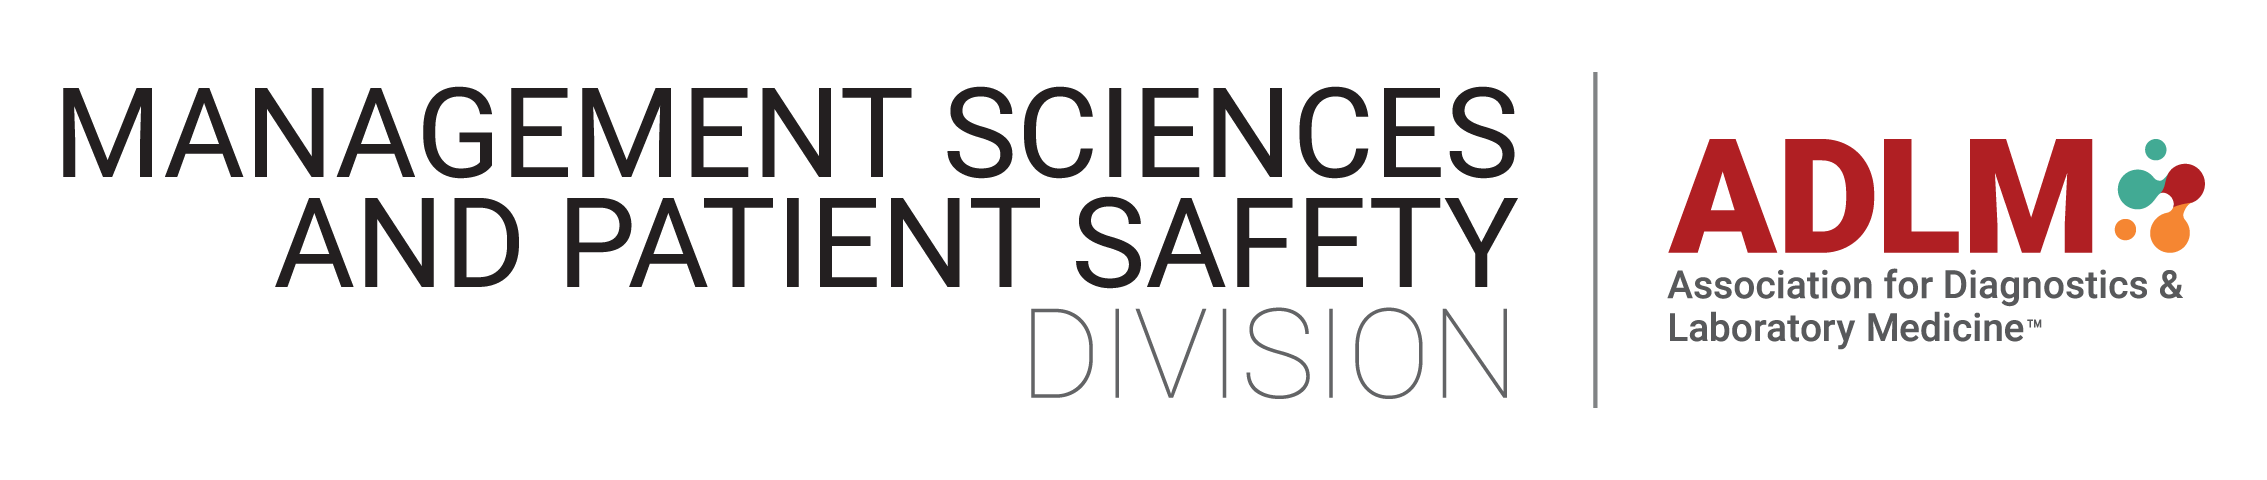 MSPS Division Logo